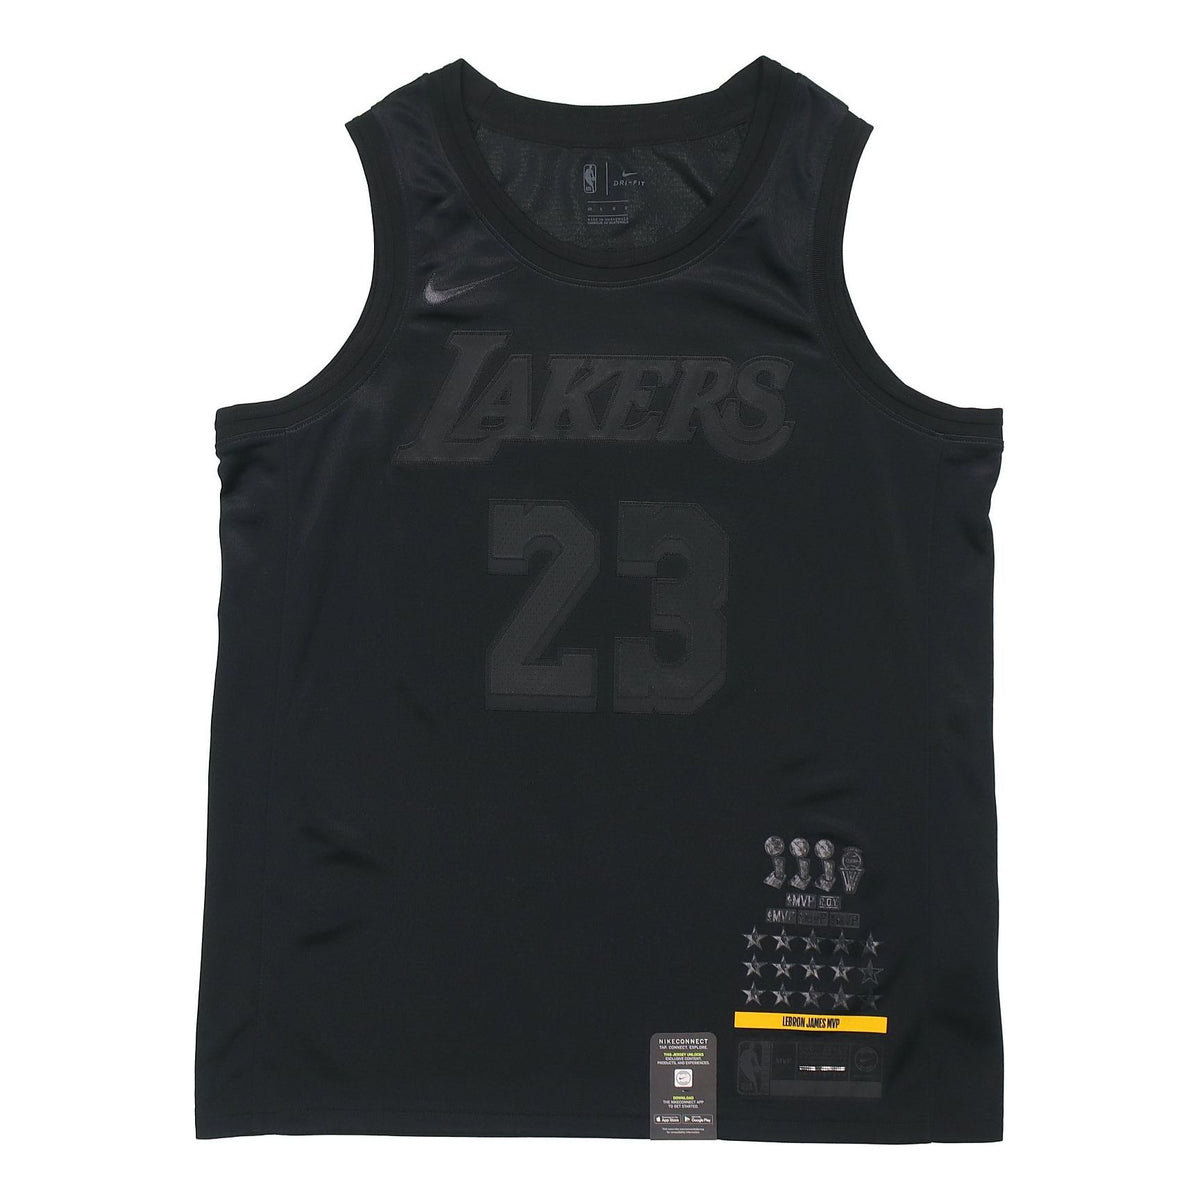 LA Lakers Lebron James Home Jersey – NewJerseysPlug